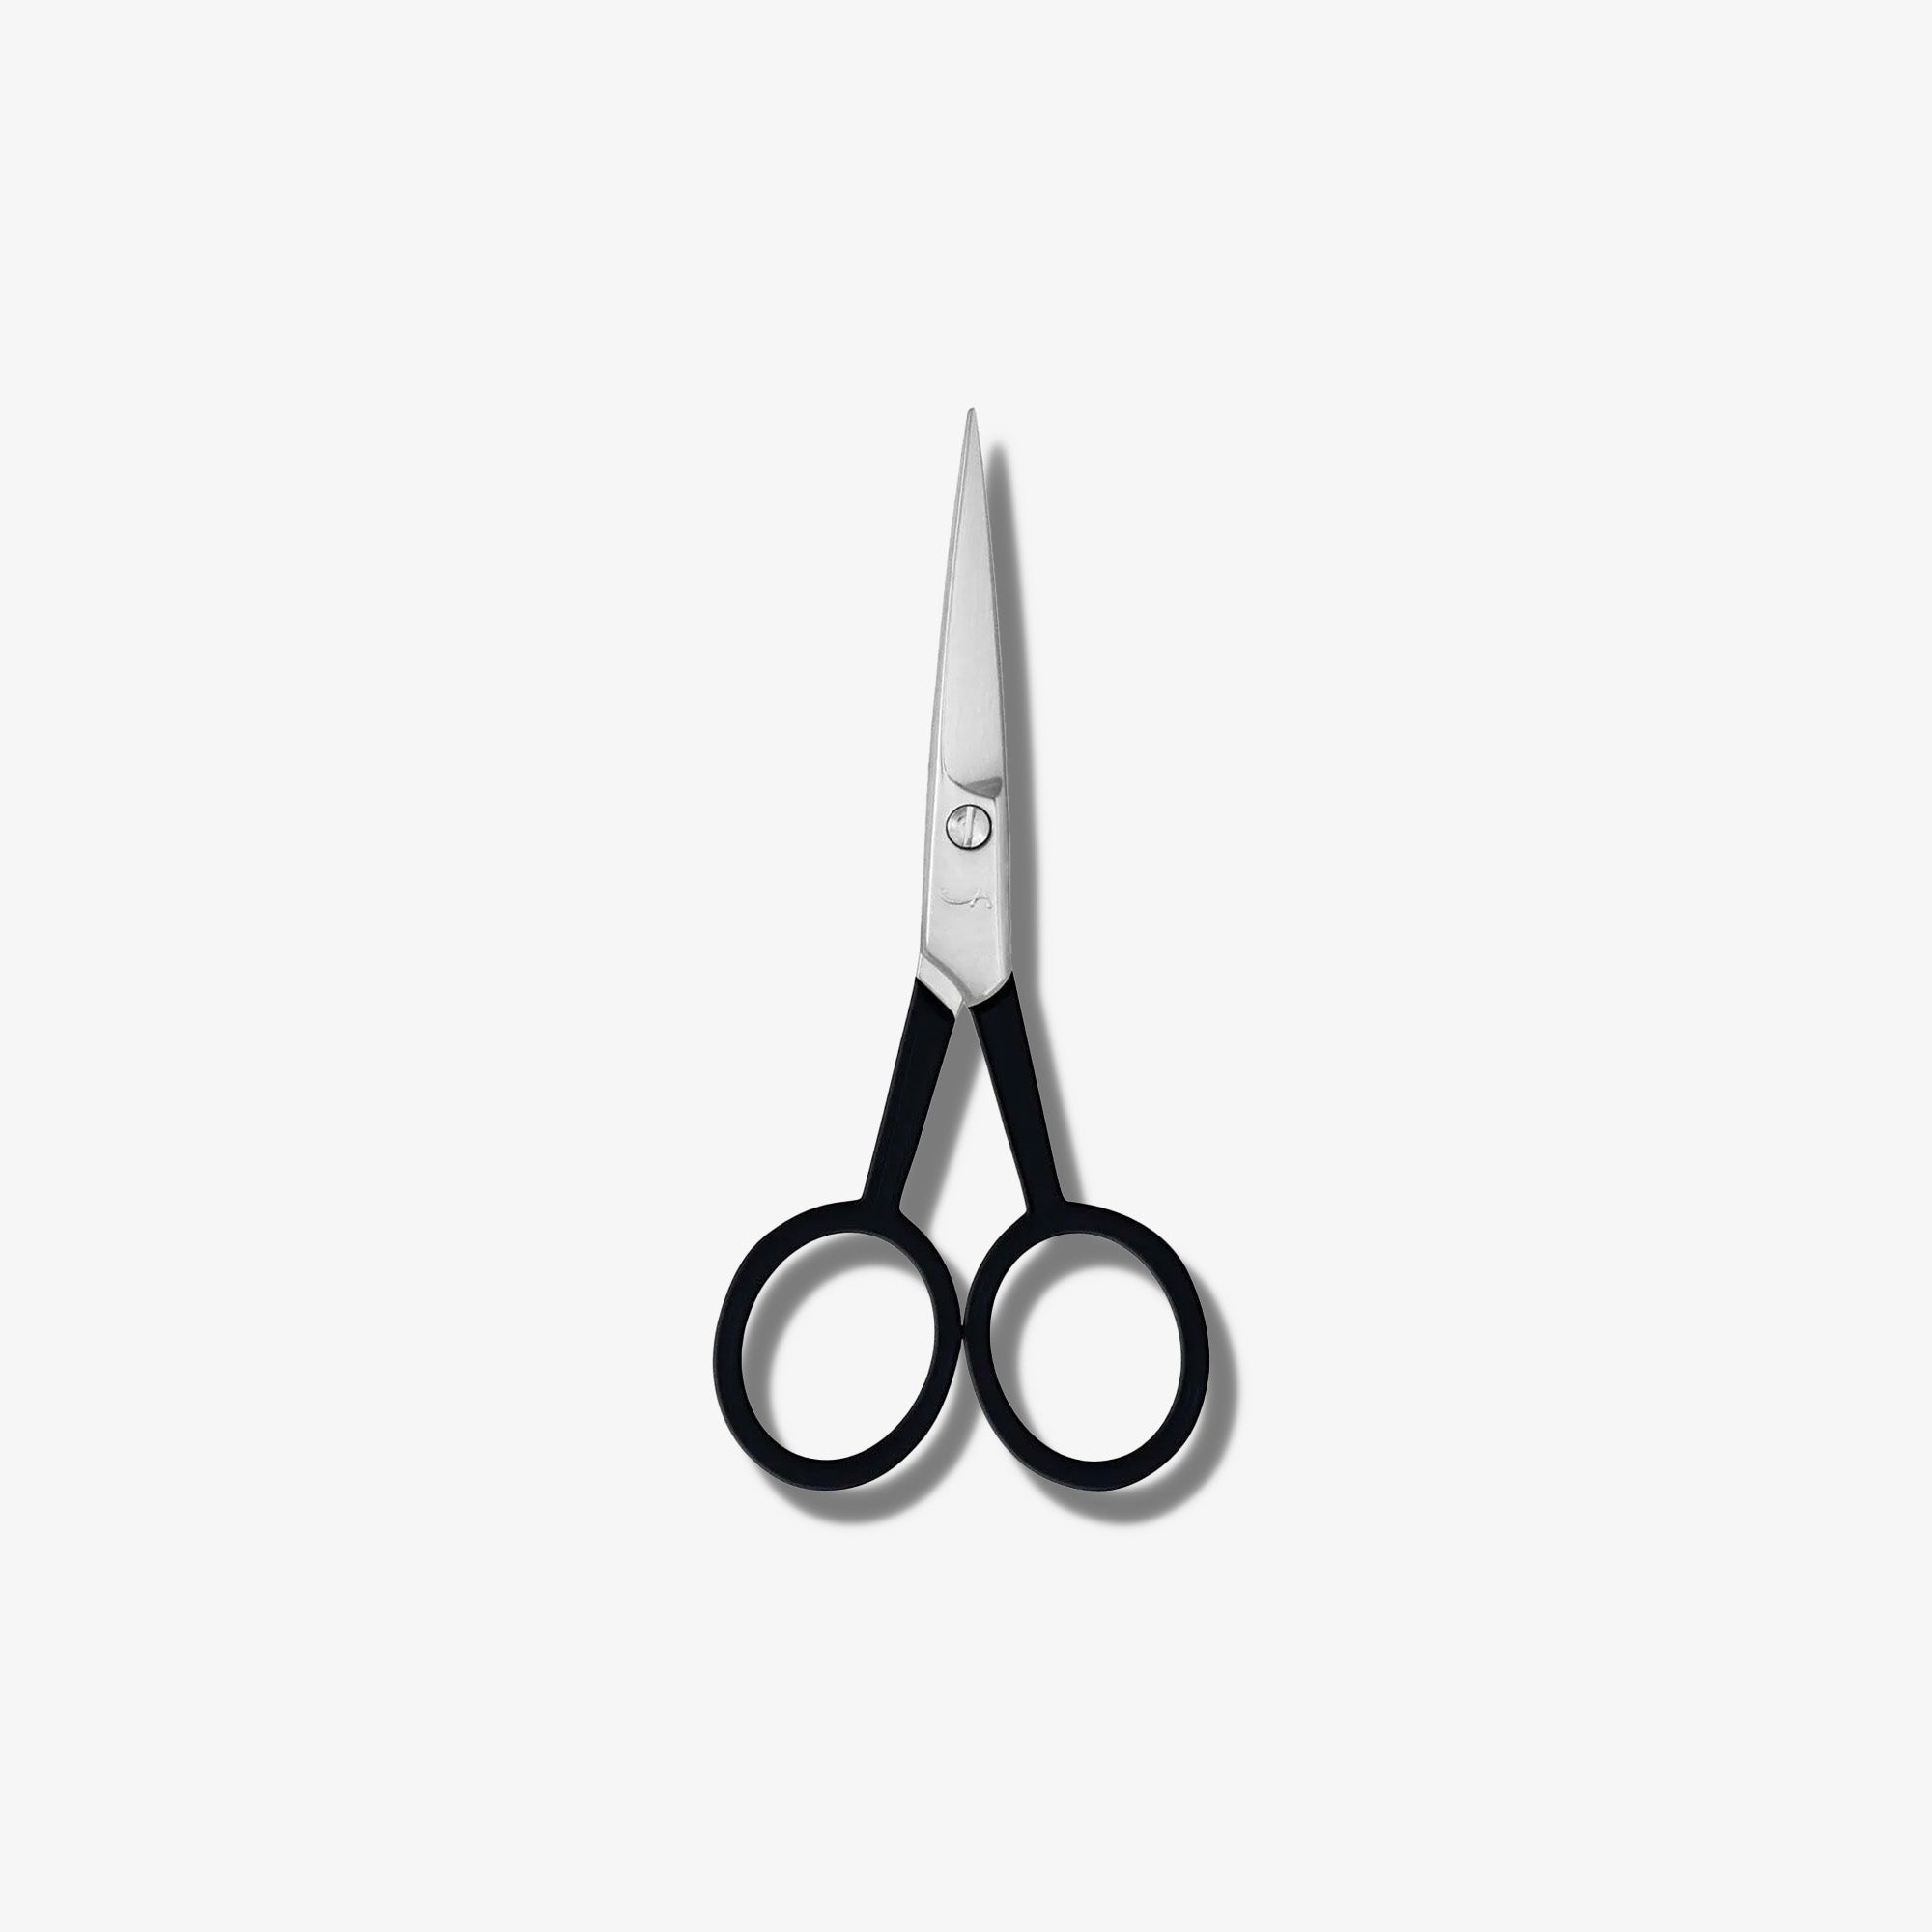 Best Brow Scissors You'll Ever Own - ArteStile Classic Brow Scissors